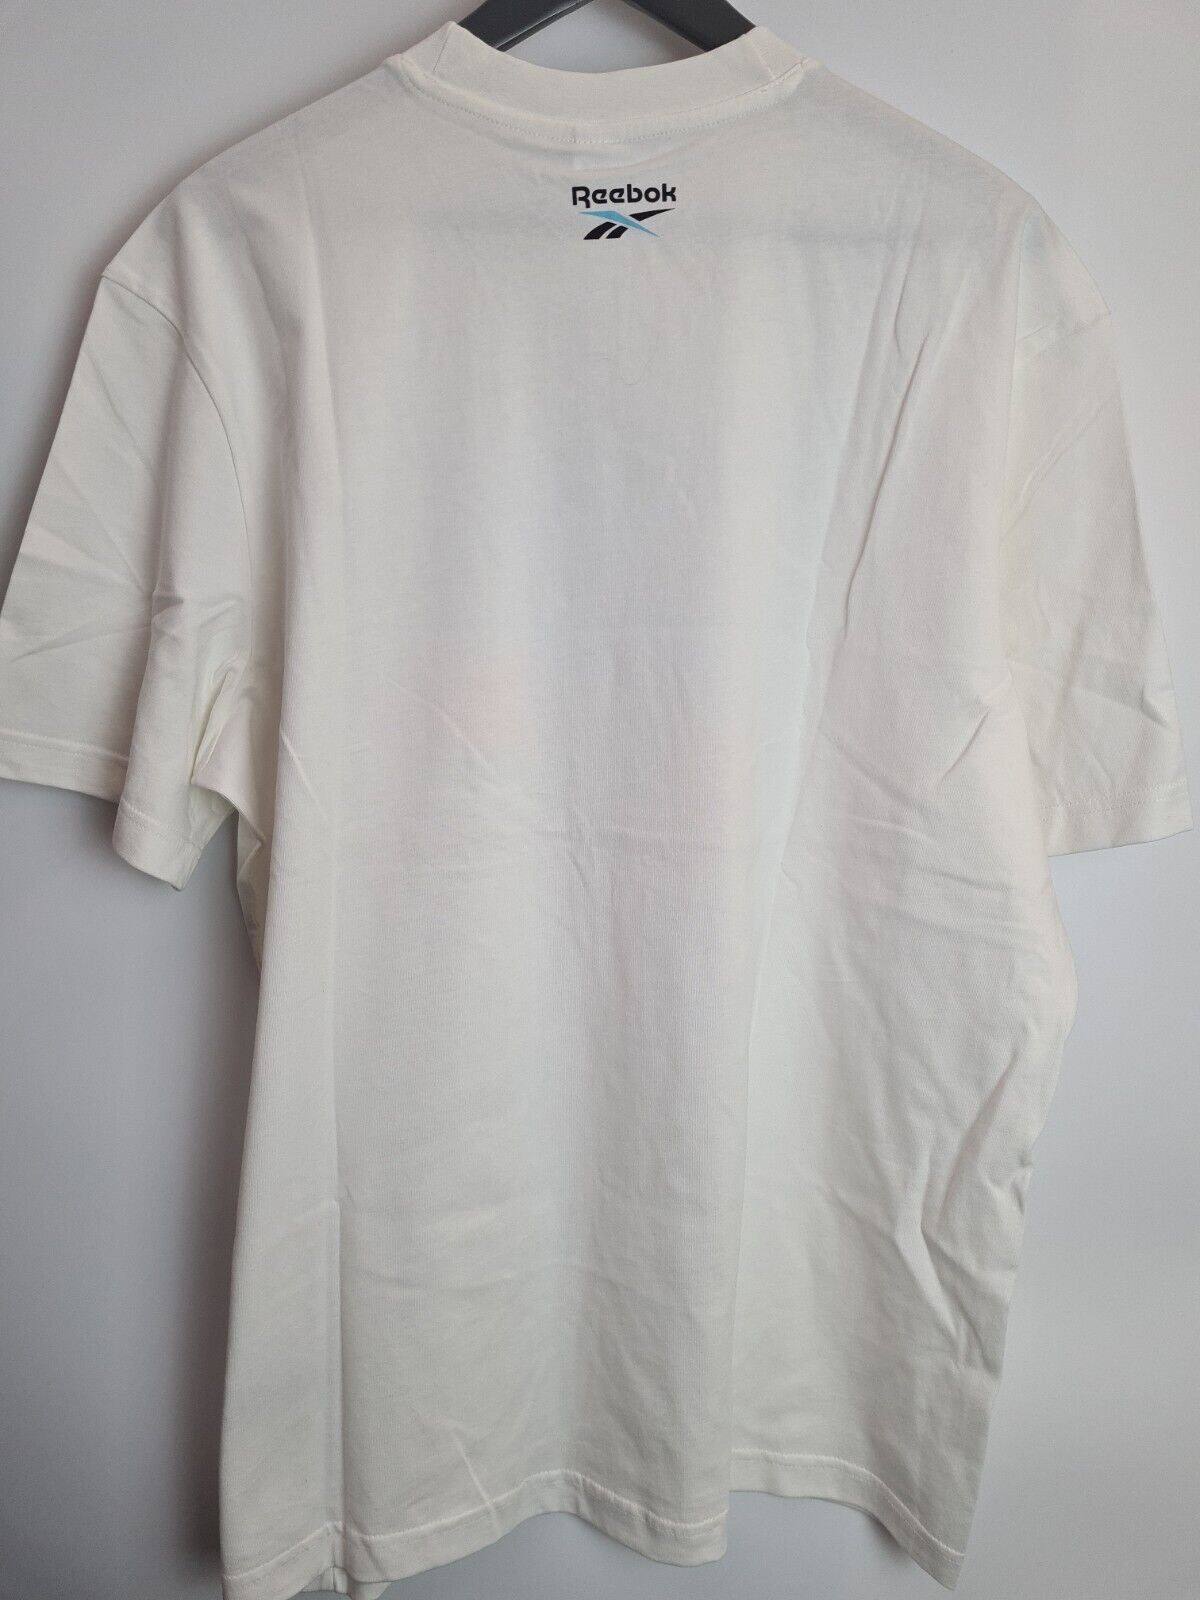 Reebok Classic International West T-Shirt Size Large **** V32